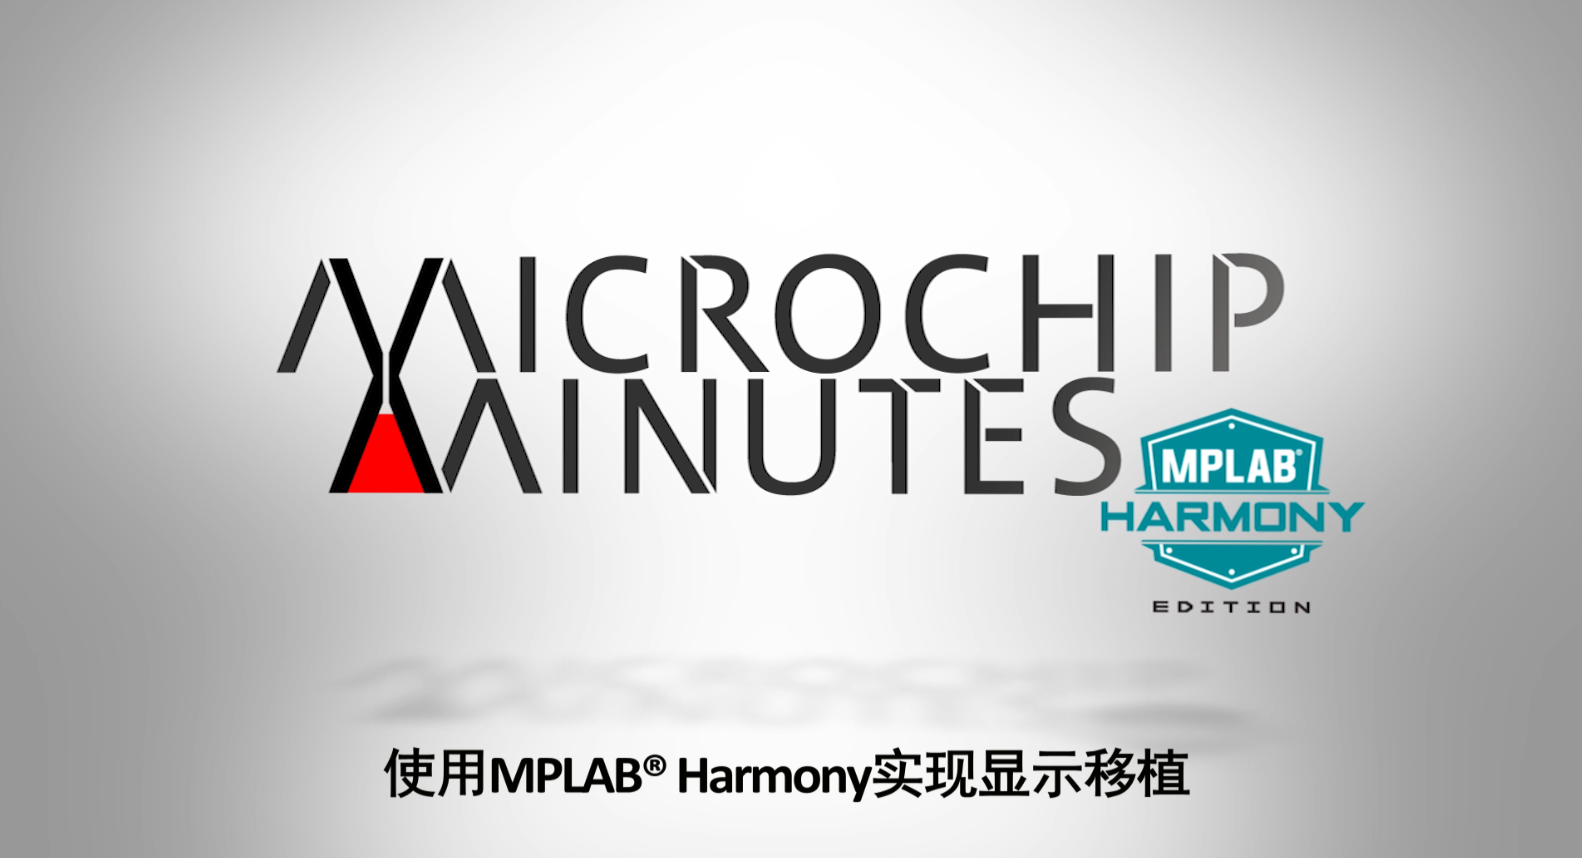 Microchip Minutes - MPLAB®  Harmony专辑 - 第6集 - 使用MPLAB Harmony实现显示移植